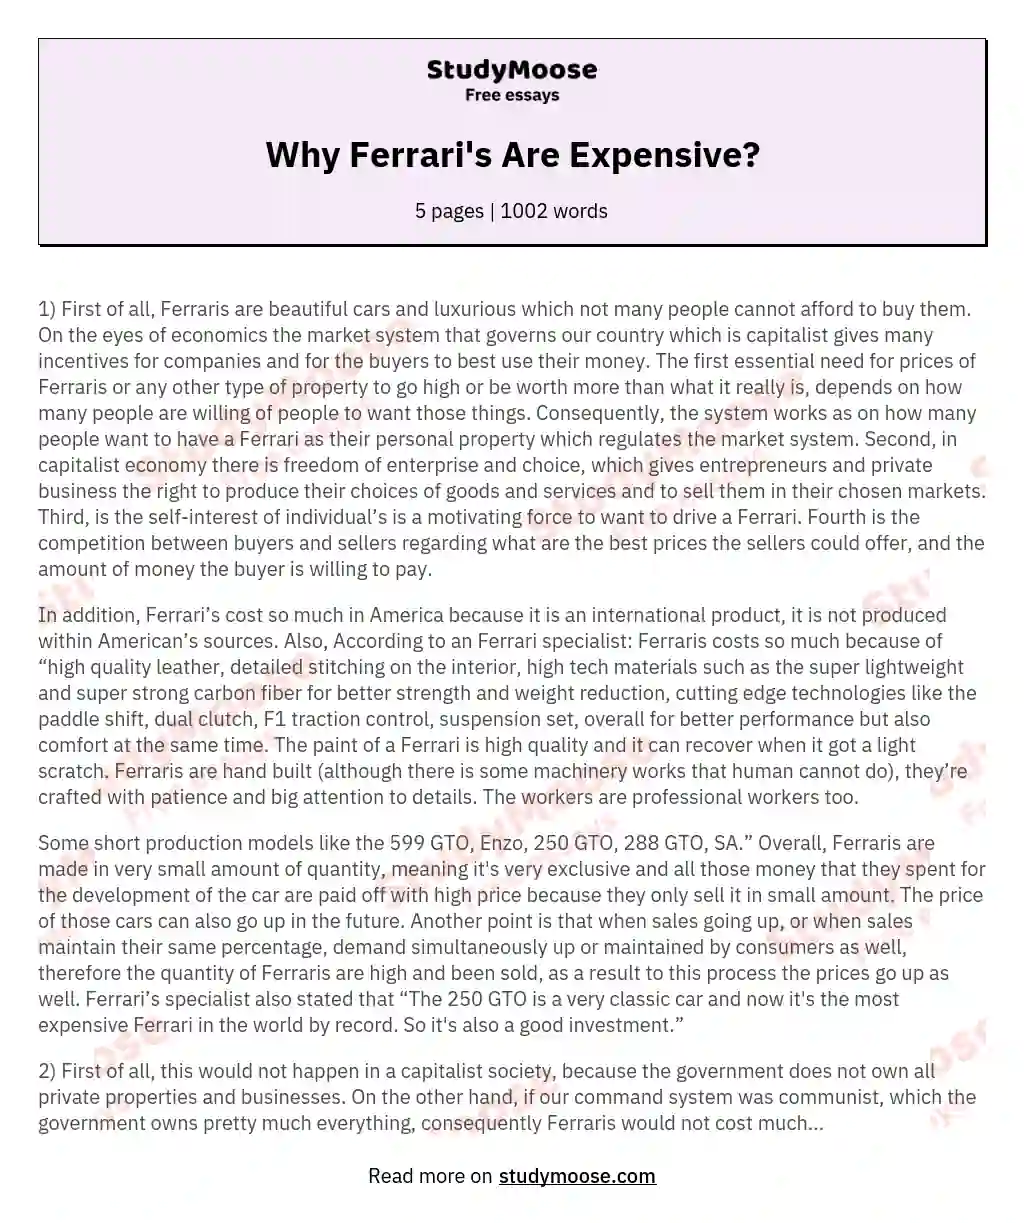 Why Ferrari's Are Expensive? essay